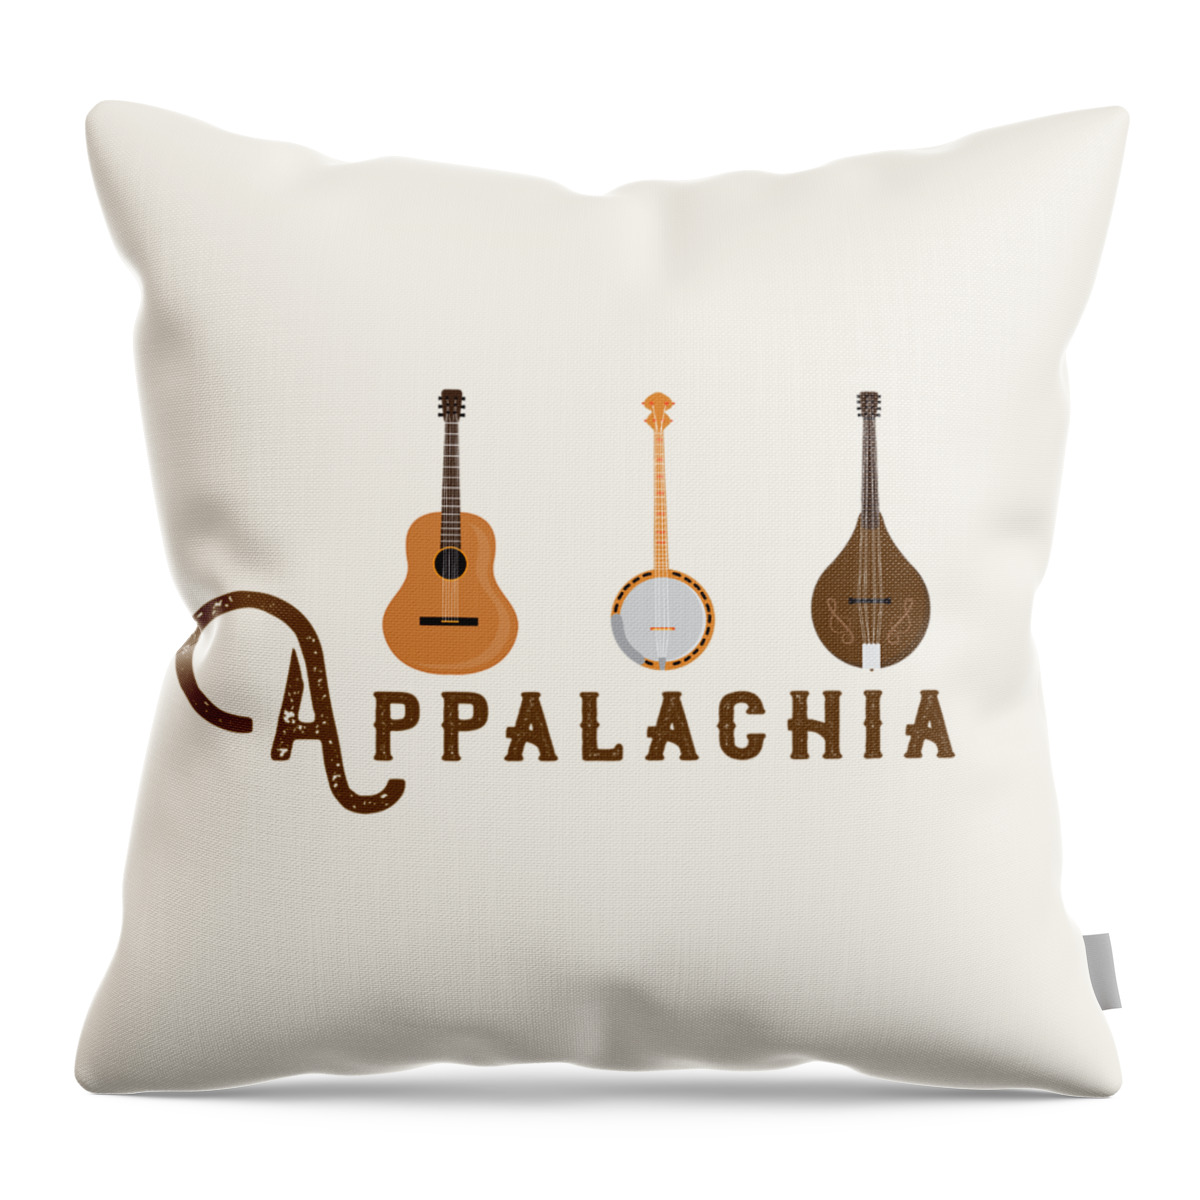 Appalachian Music Throw Pillow featuring the digital art Appalachia Mountain Music White Mountains by Heather Applegate